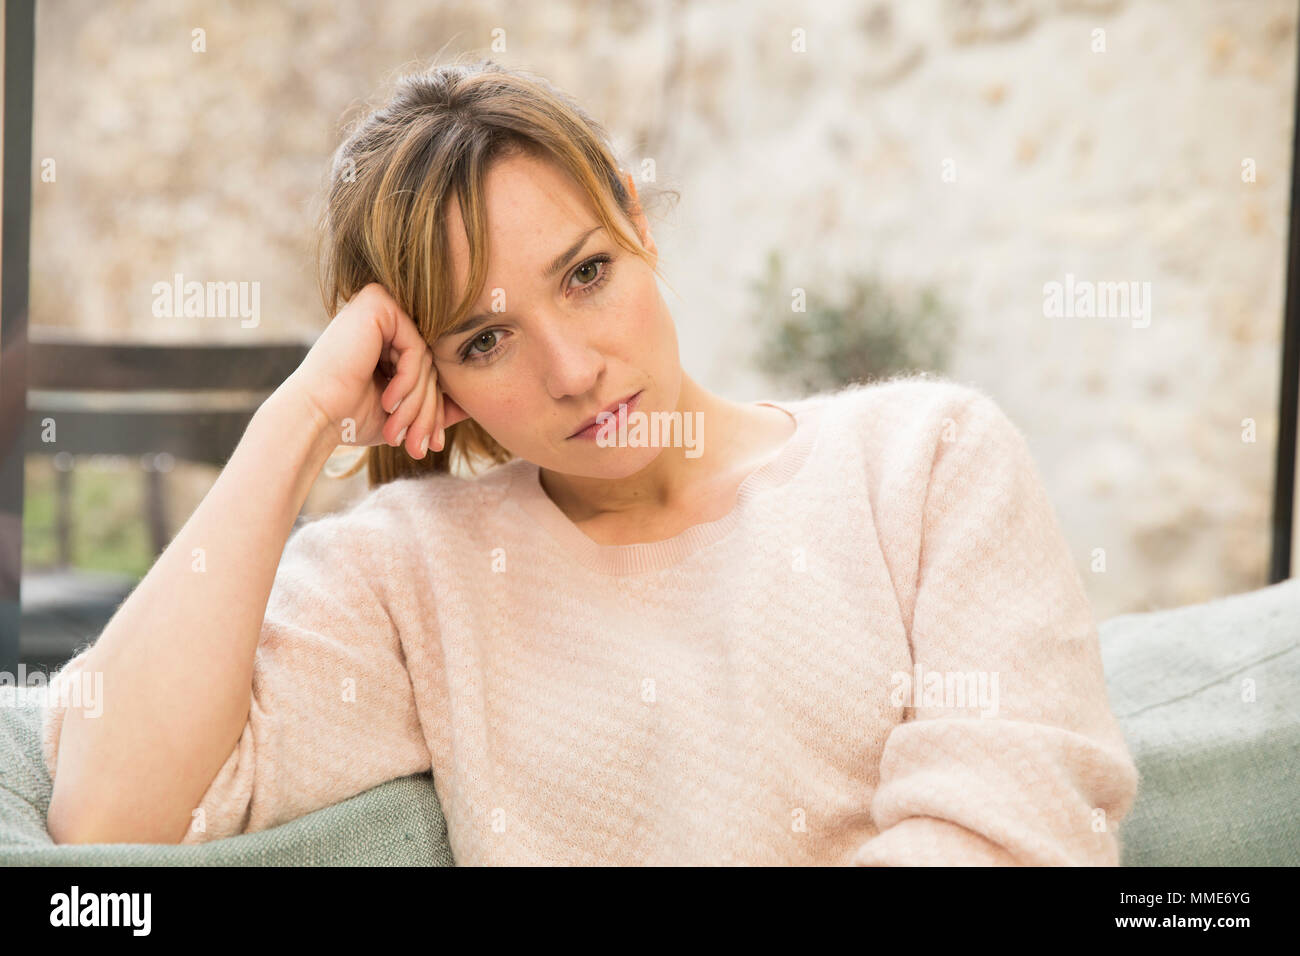 DEPRESSED WOMAN Stock Photo